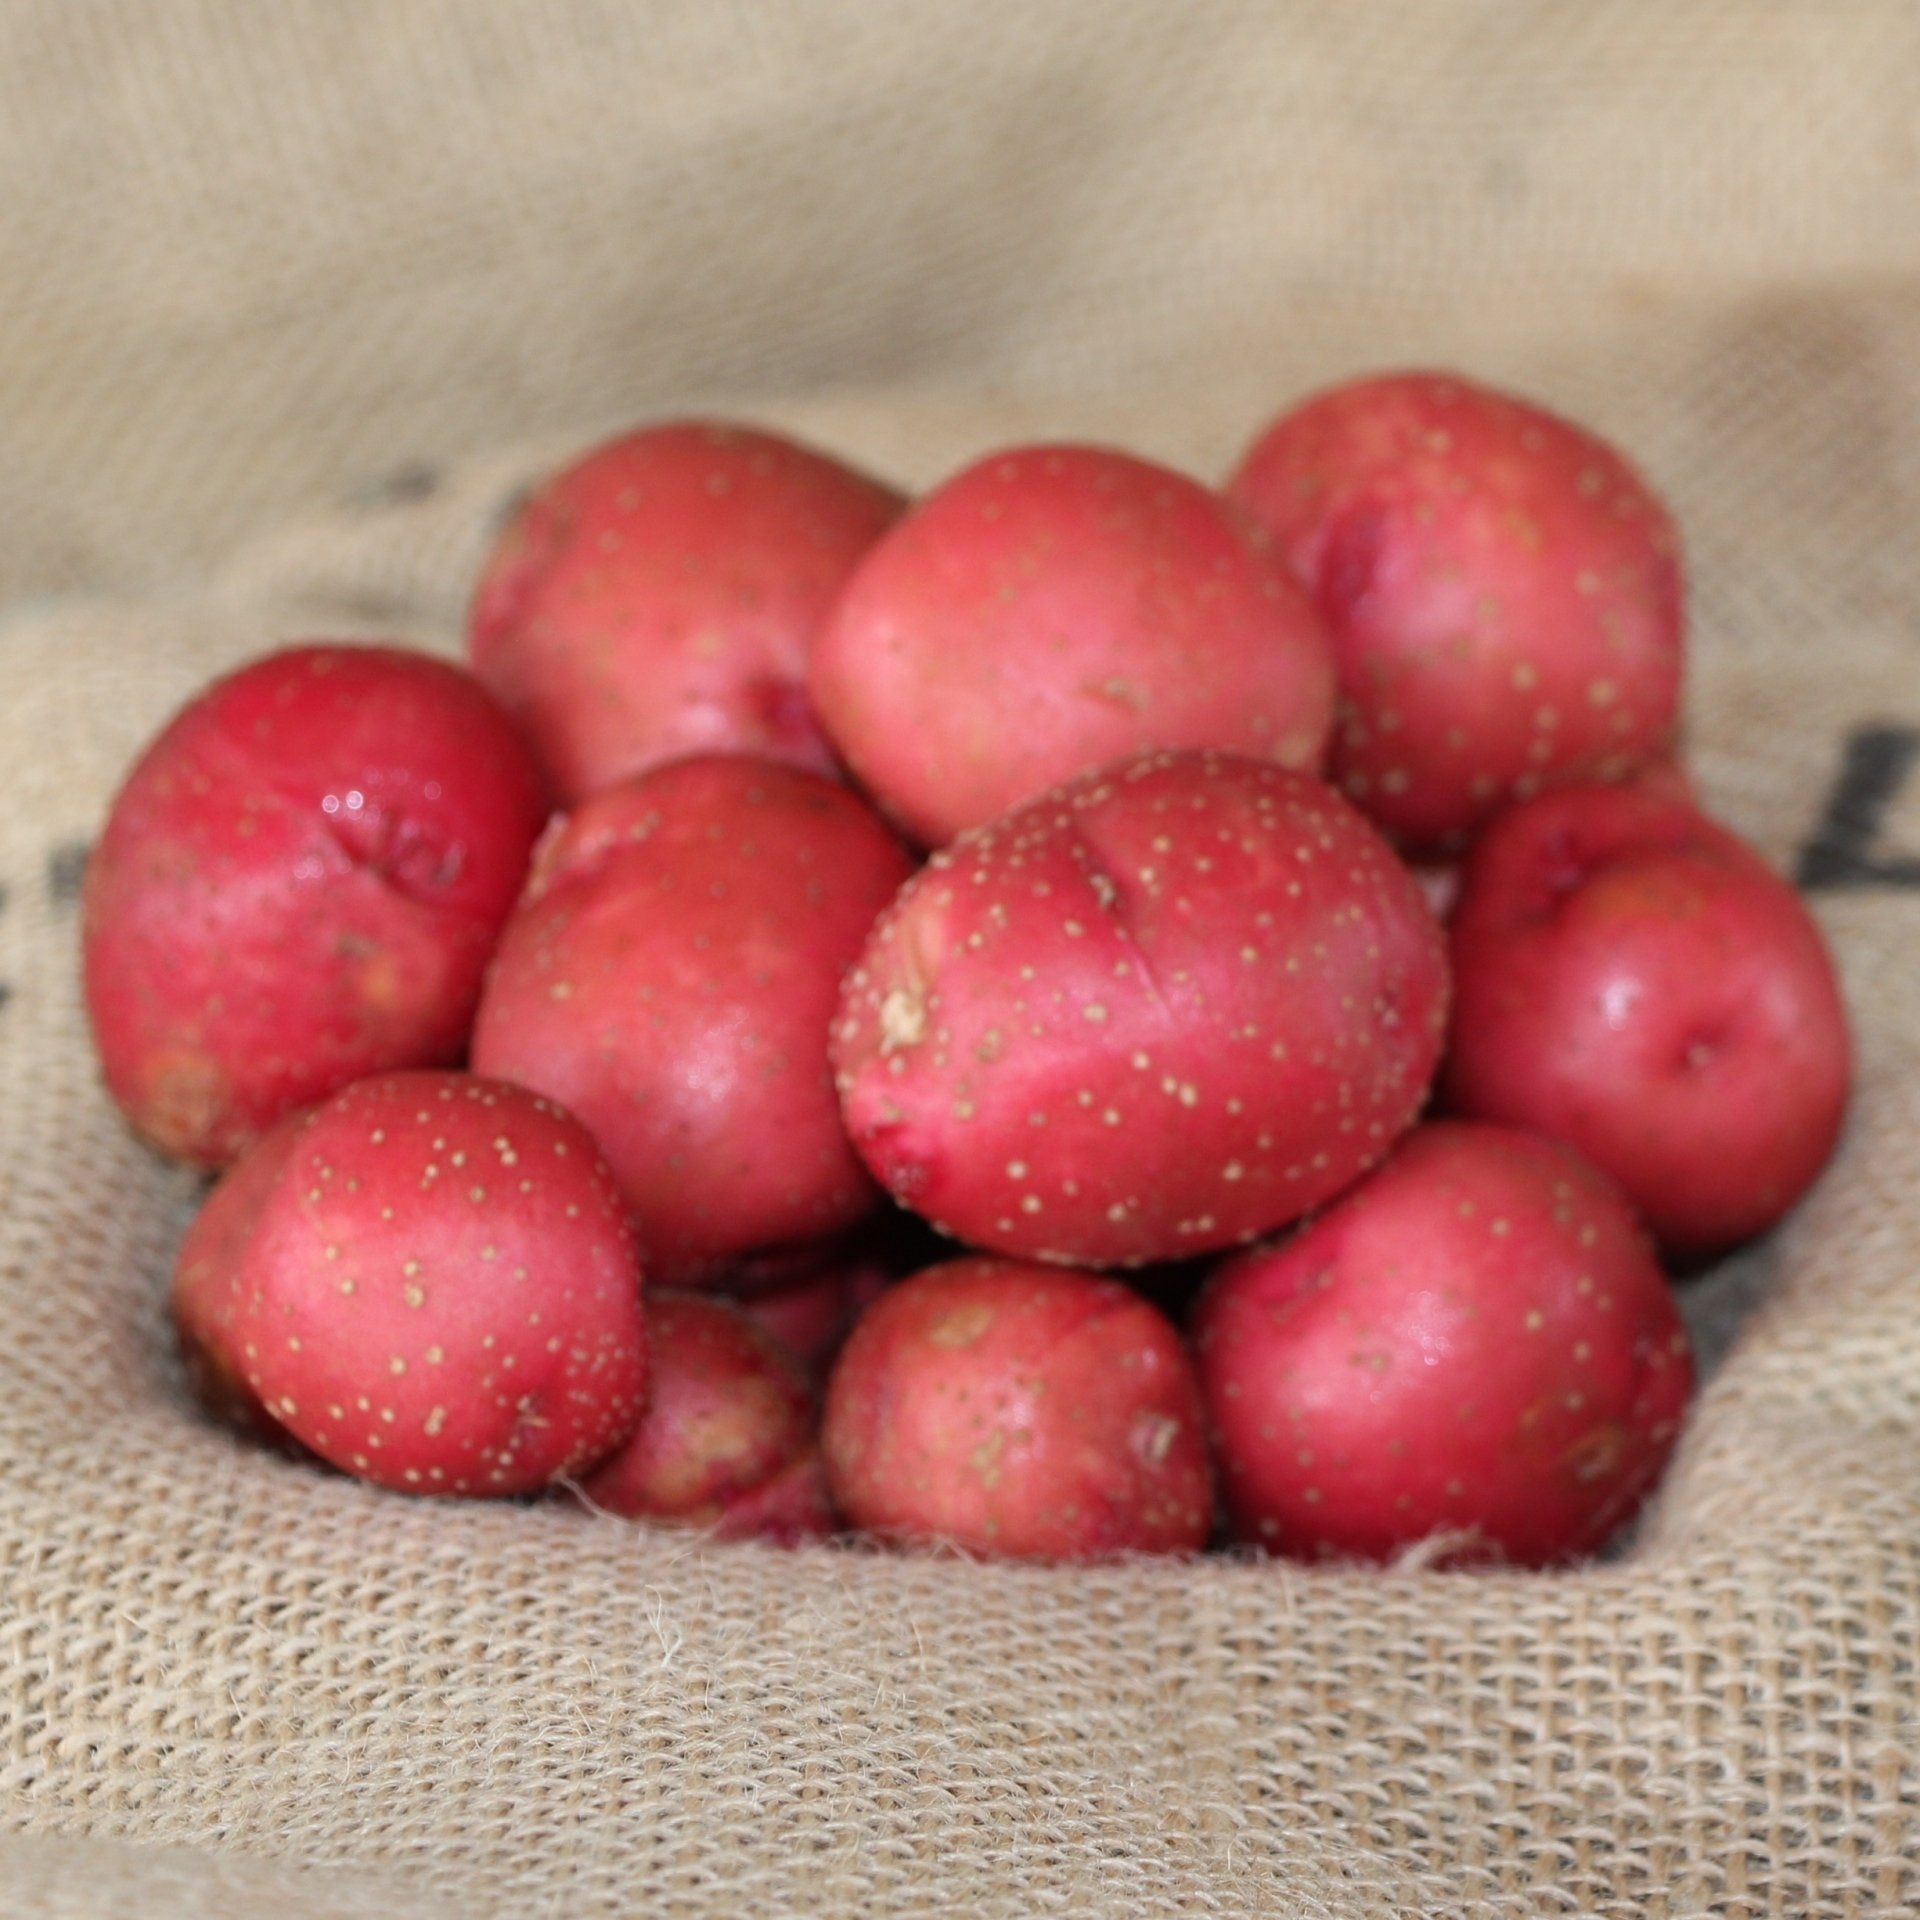 locally grown new potatoes